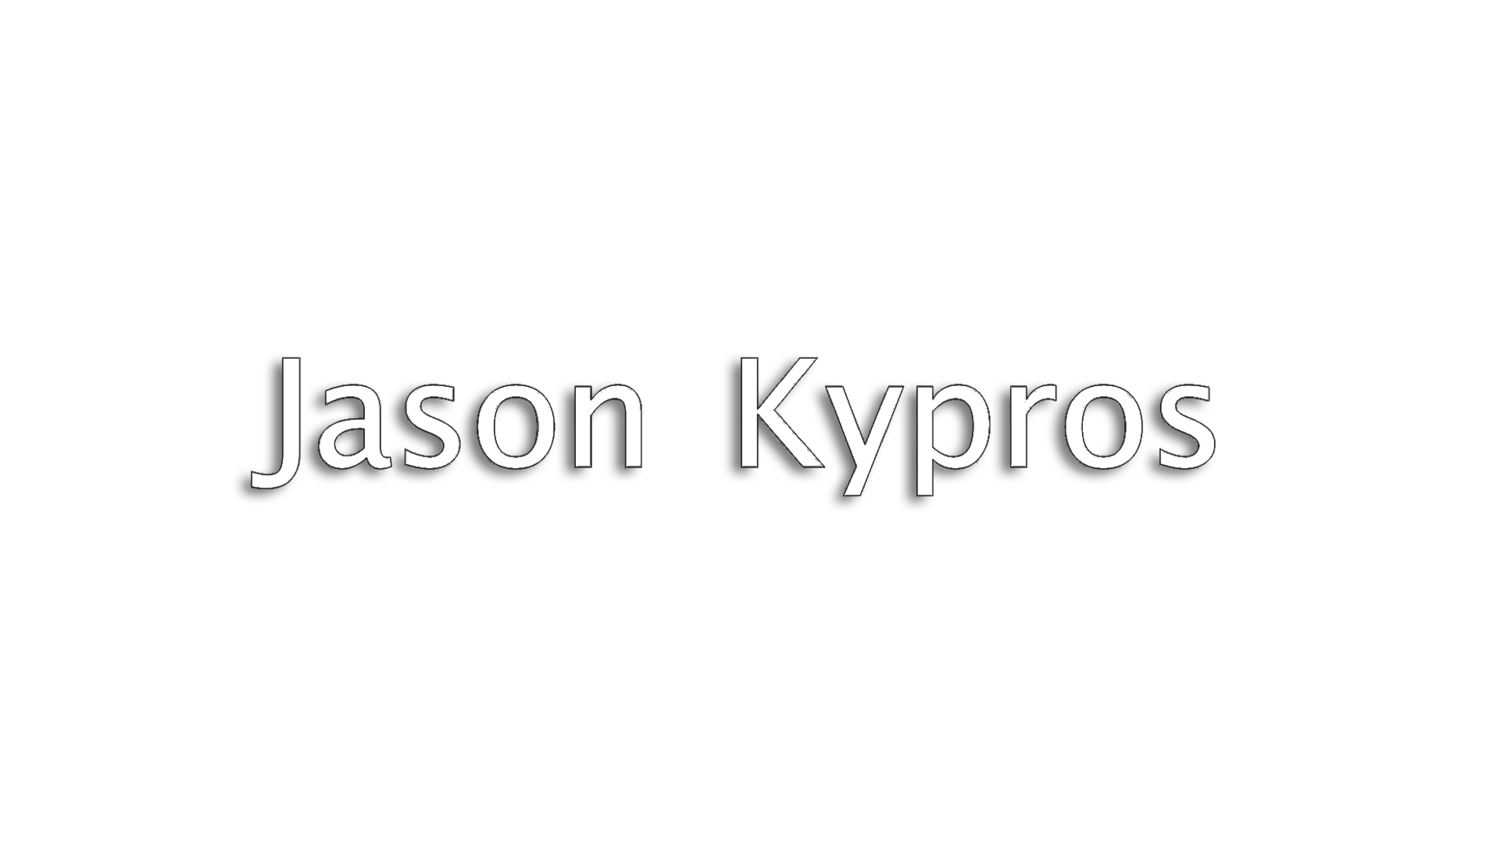 Jason Kypros